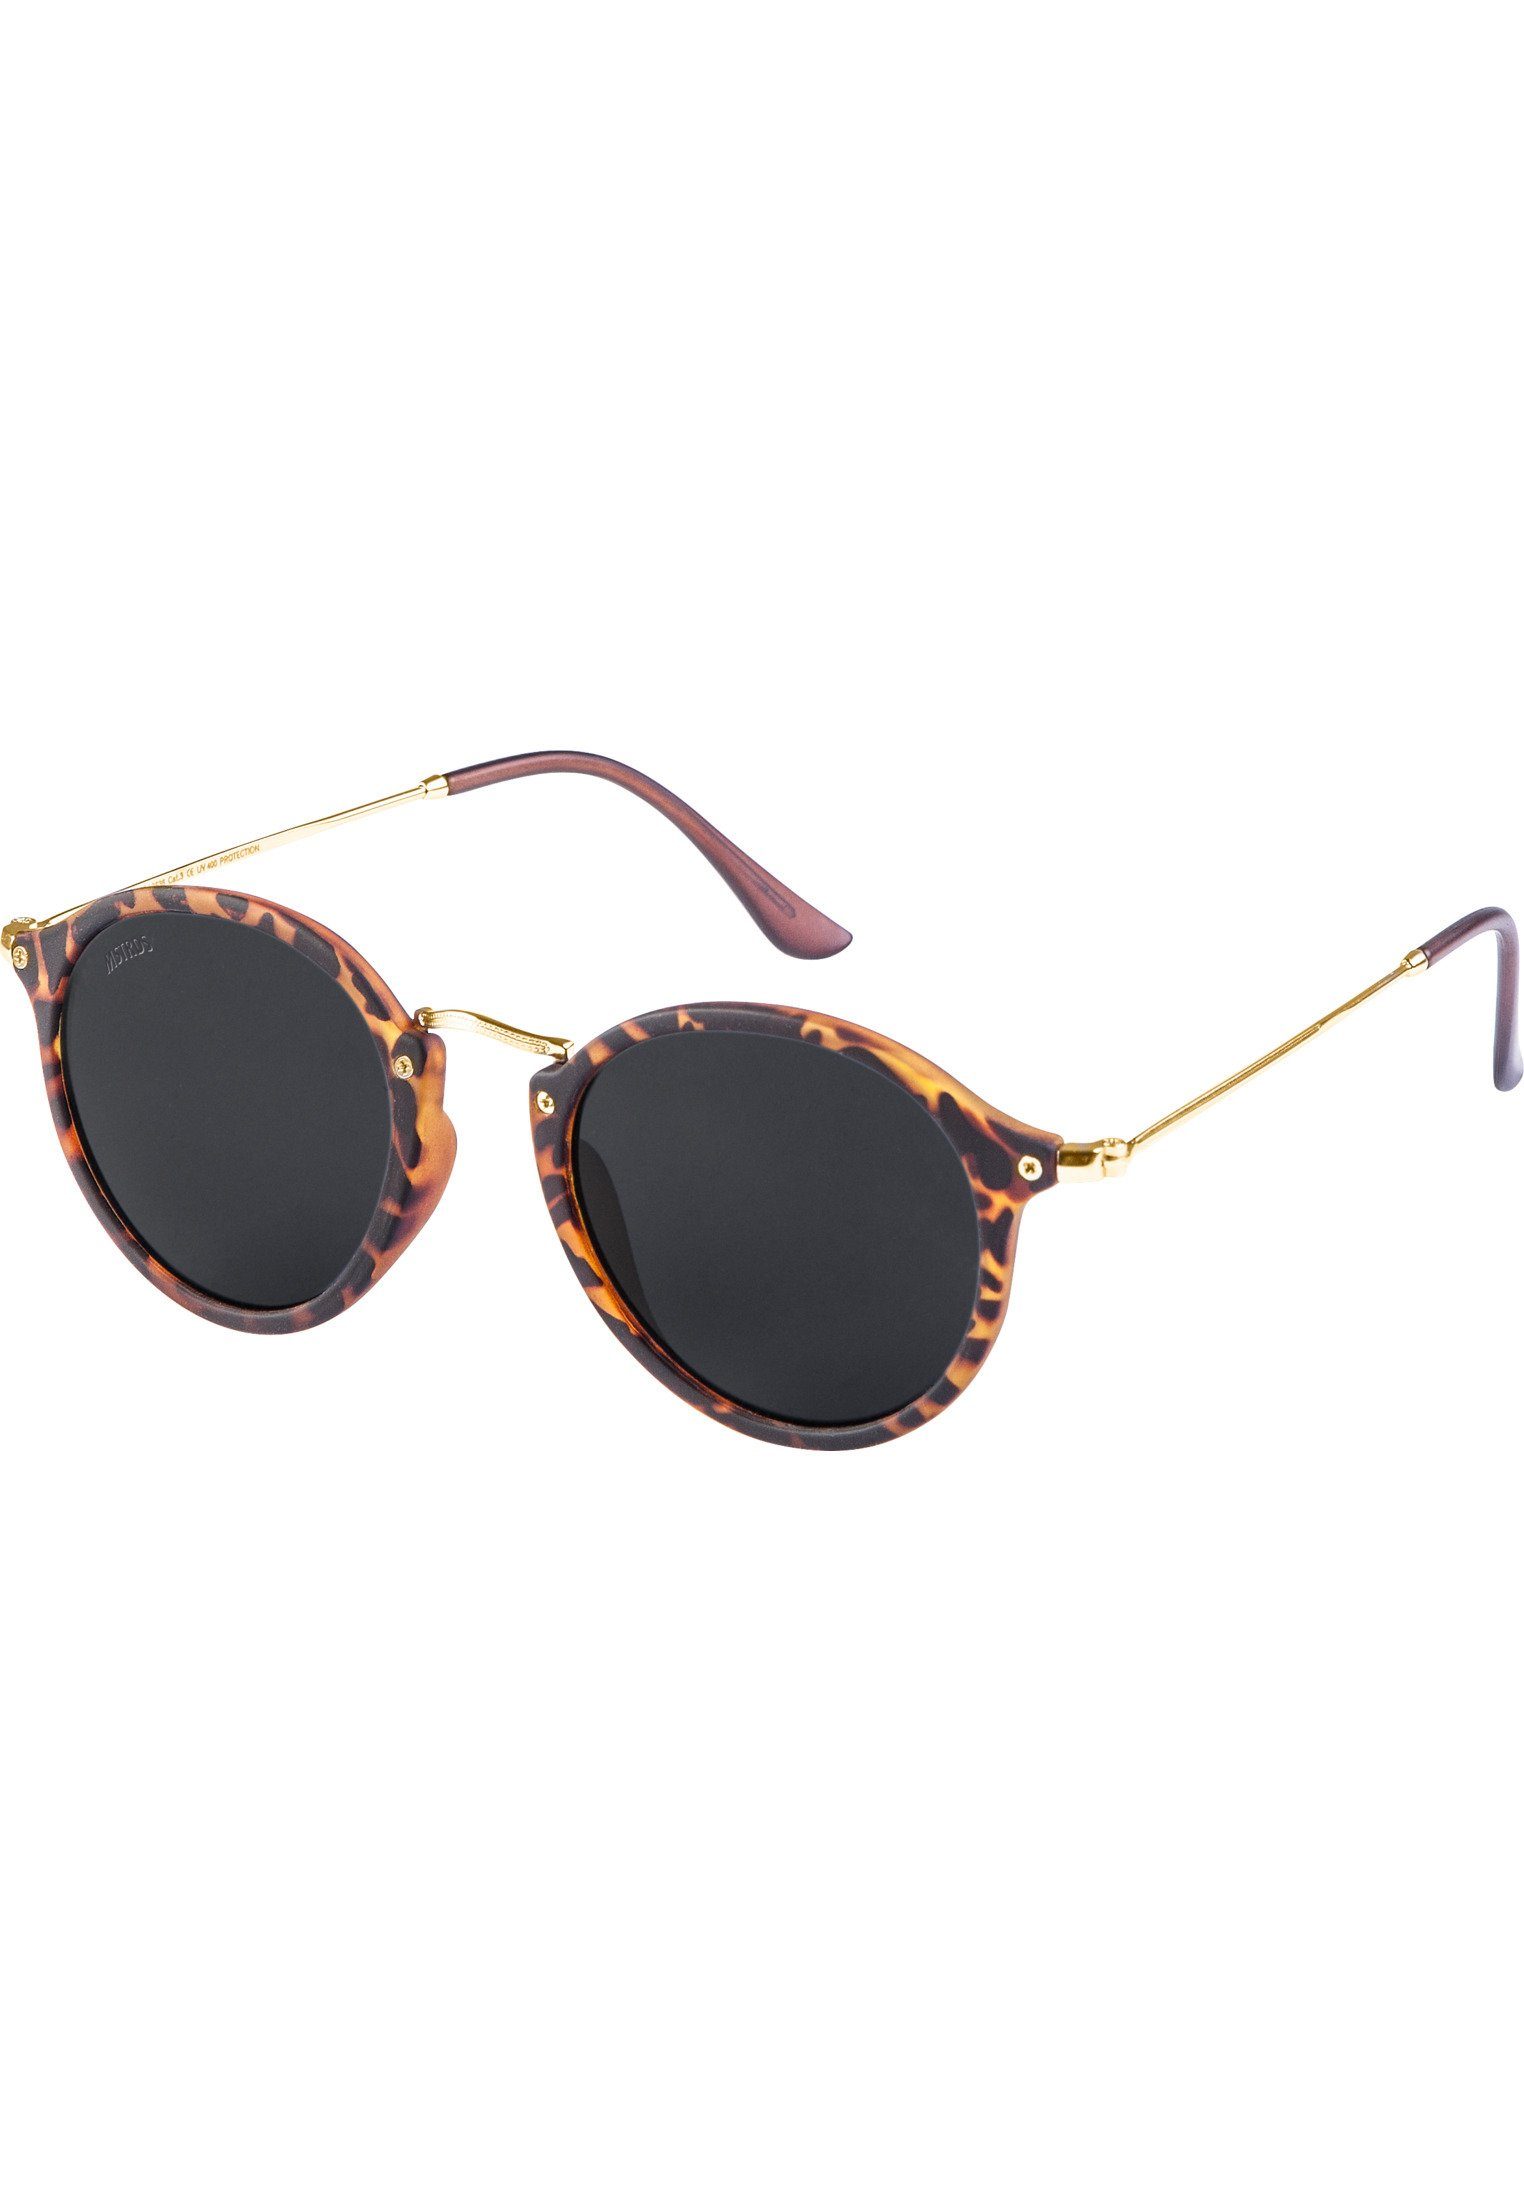 MSTRDS Sonnenbrille Spy Sunglasses Accessoires havanna/grey